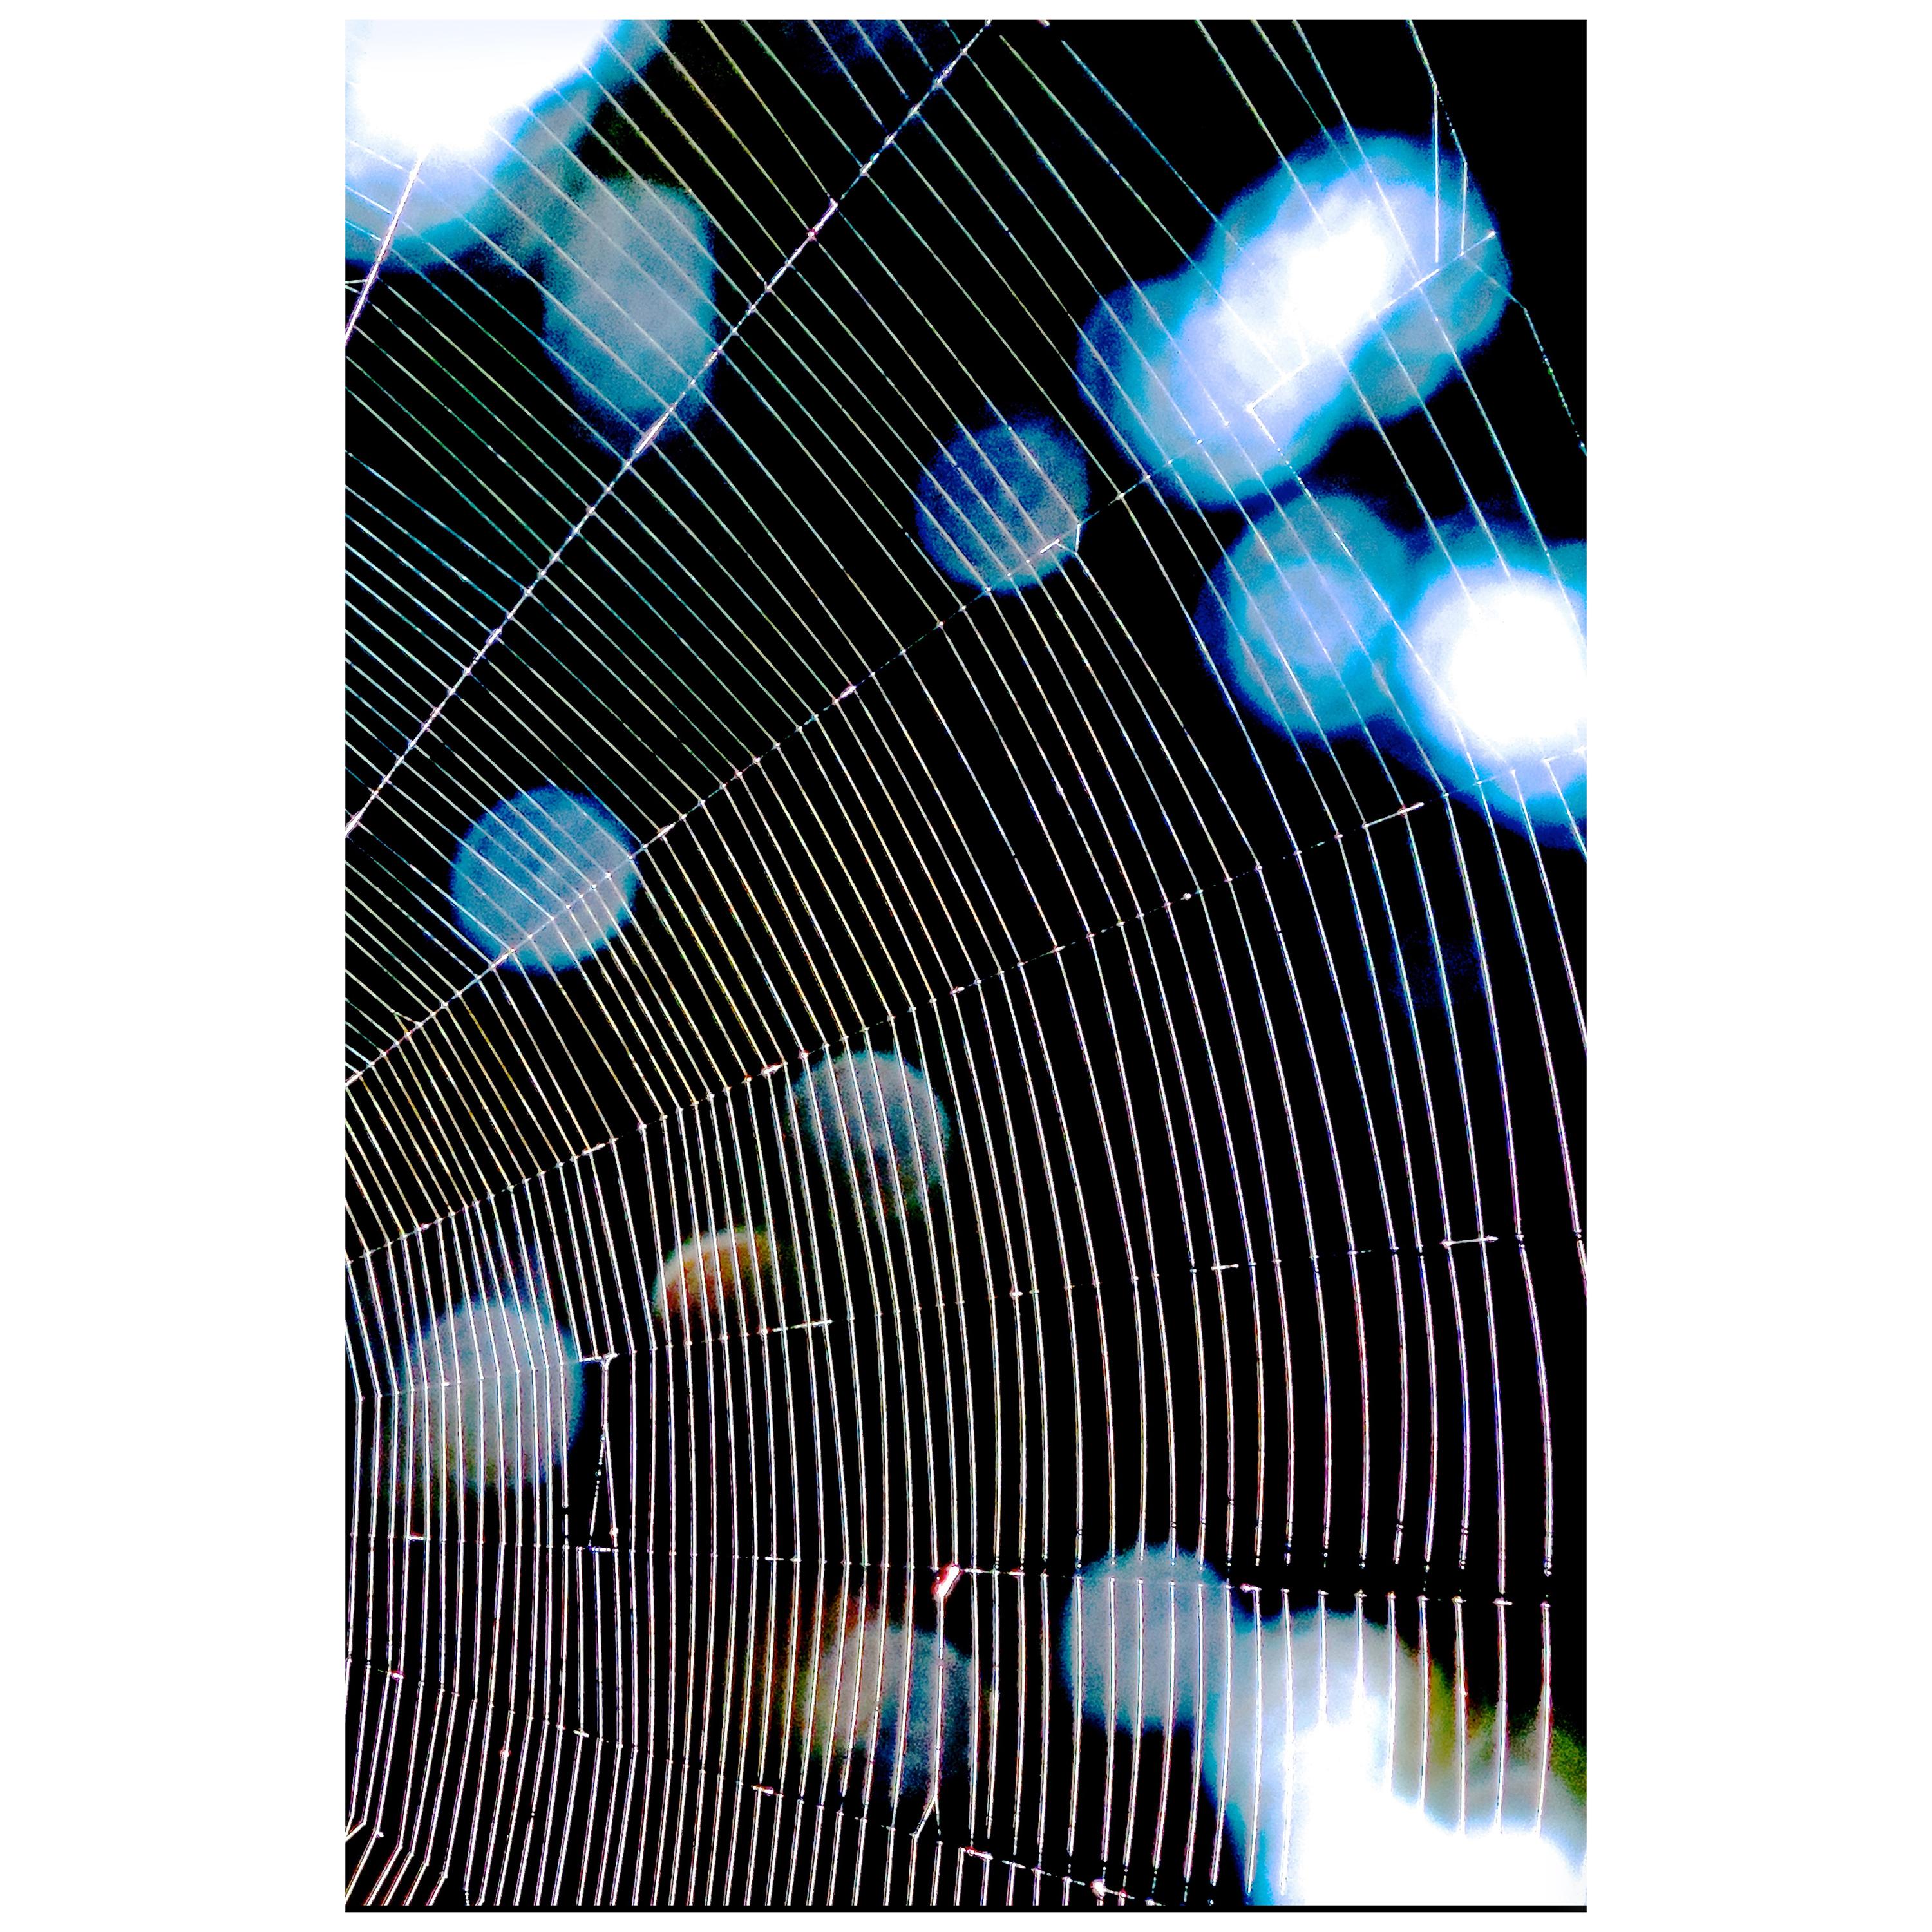 Blue Spider Web Digital Photograph Print by Dave Lasker For Sale